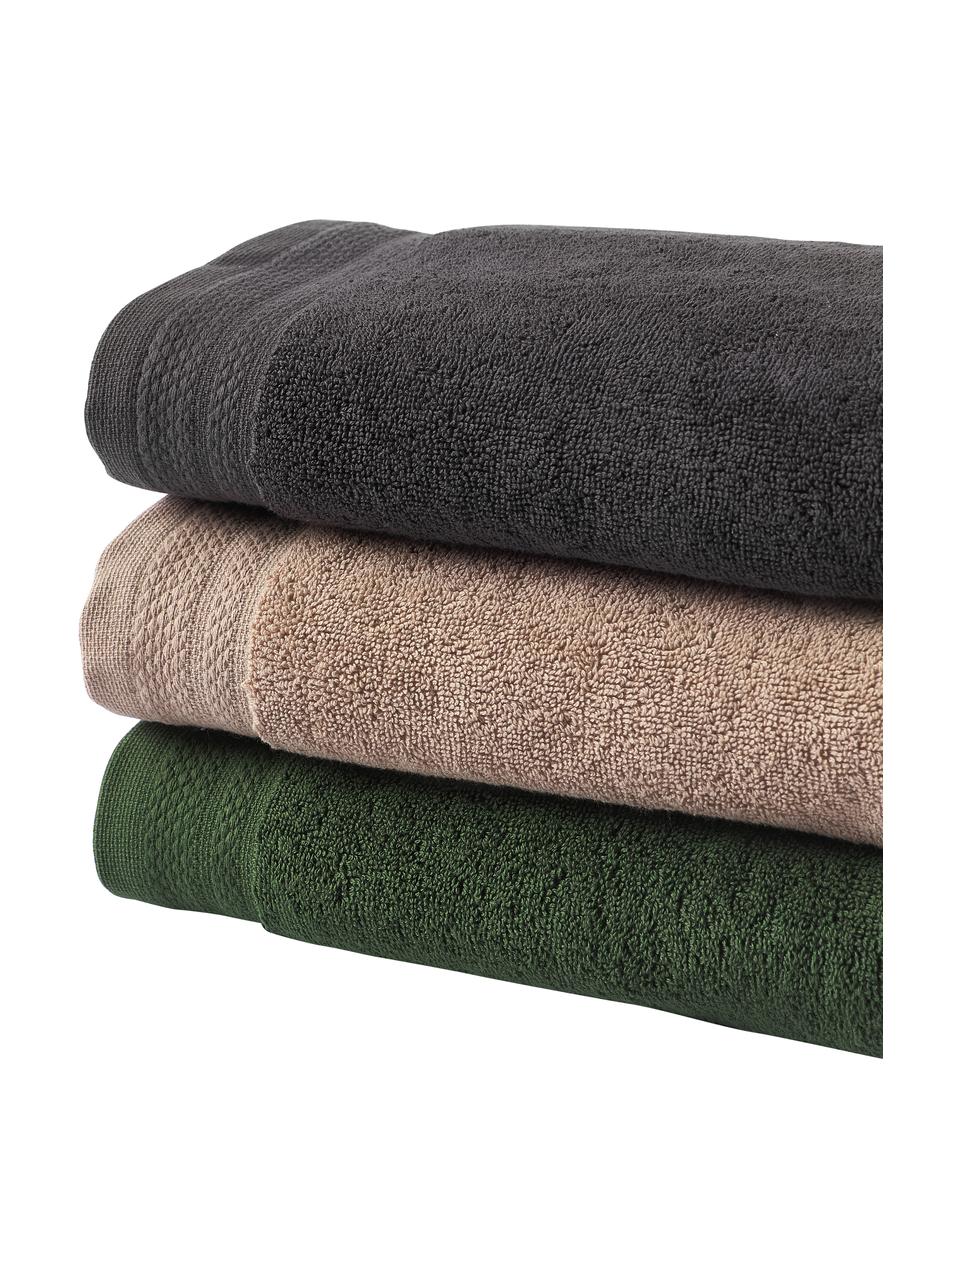 Set de toallas de algodón ecológico Premium, 3 uds., 100% algodón ecológico con certificado GOTS (por GCL International, GCL-300517)
Gramaje superior 600 g/m², Beige, Set de diferentes tamaños